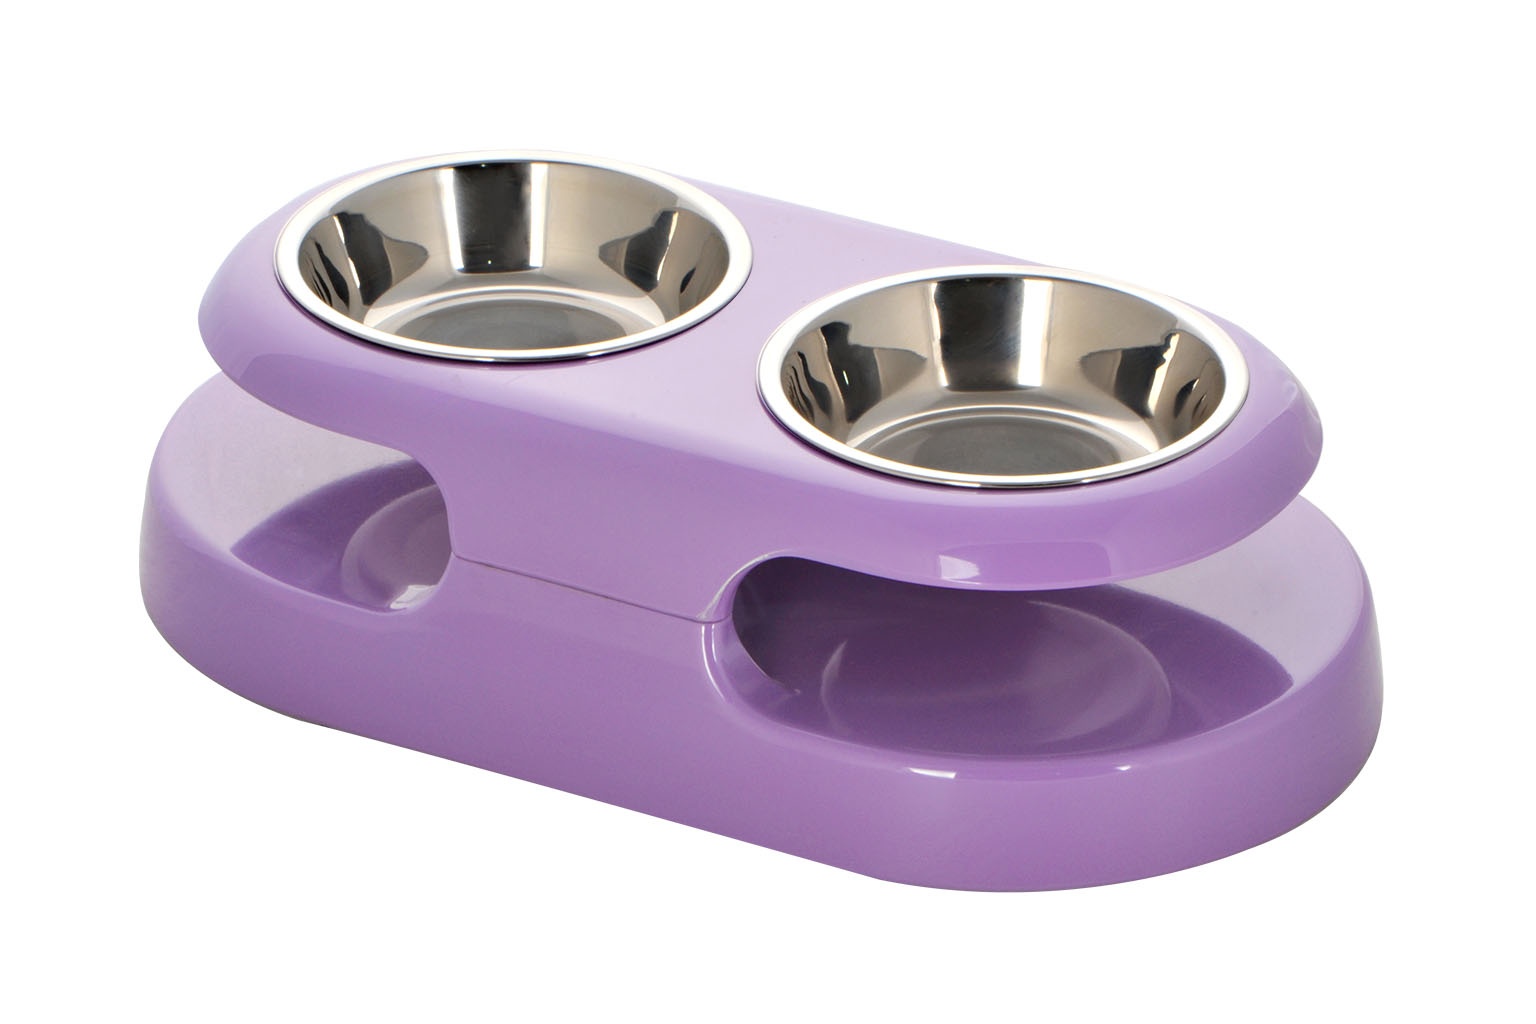 Shelf dog bowl set